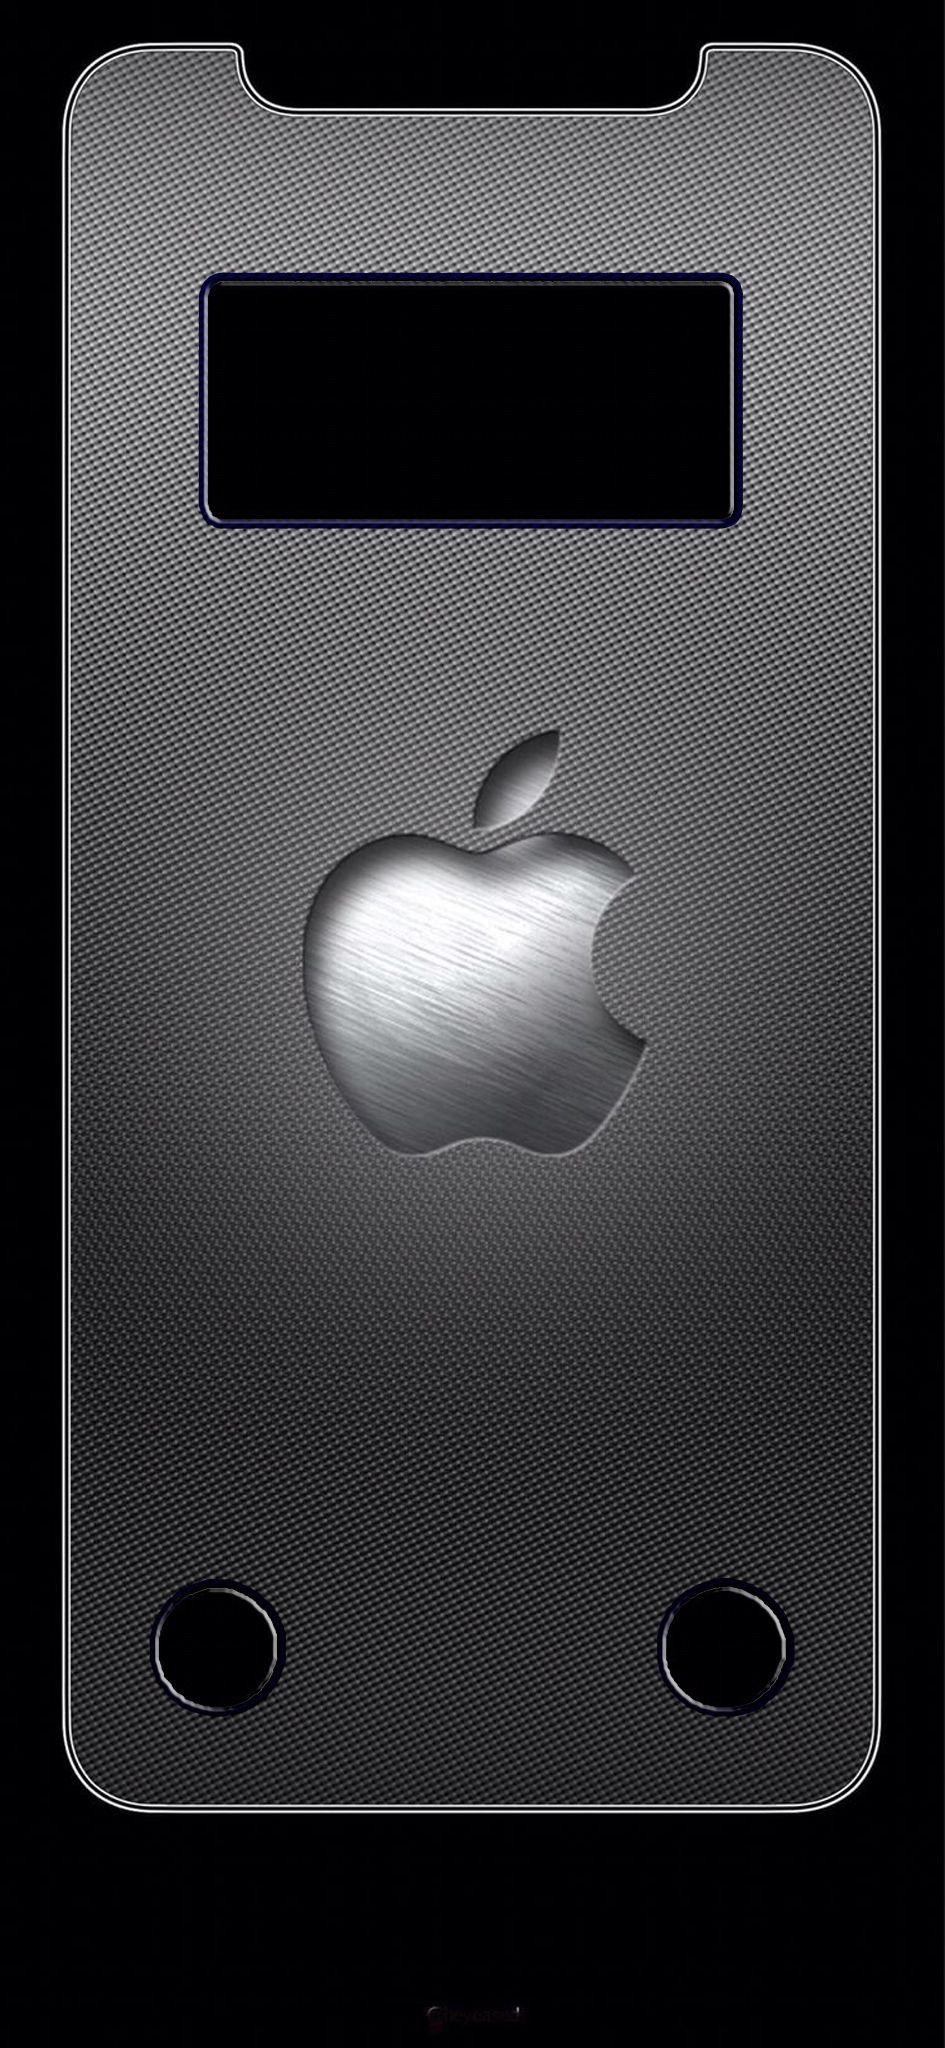 iPhone X Lockscreen Wallpaper. iPhone wallpaper, iPhone